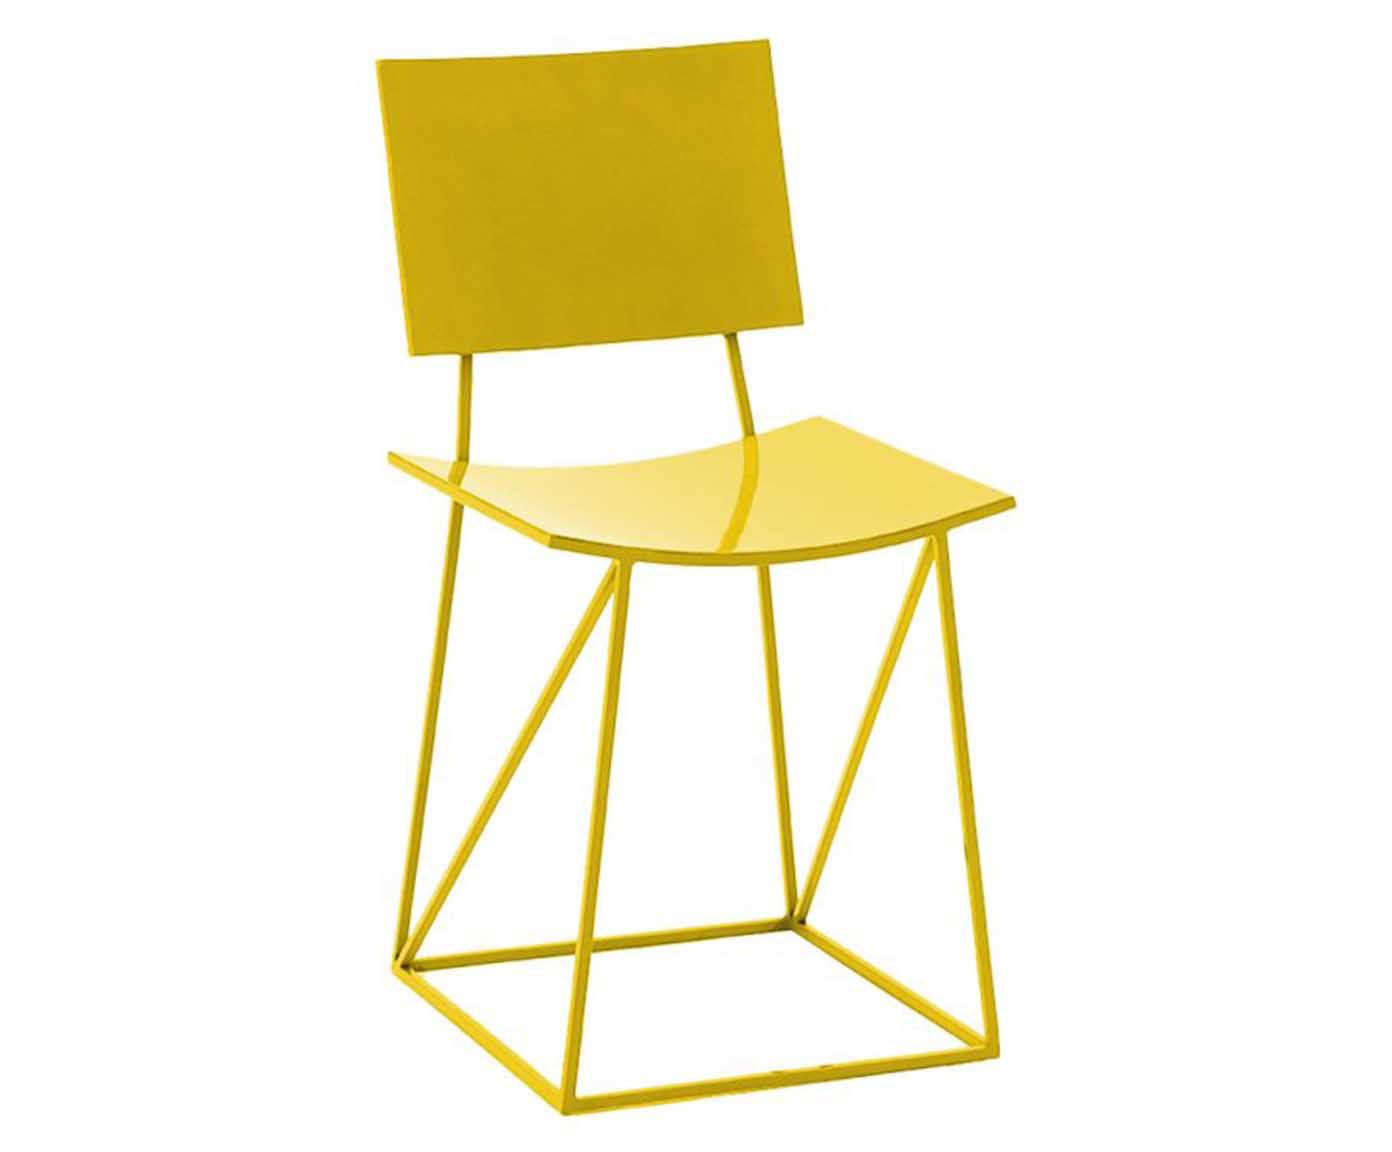 Cadeira charm - soleil | Westwing.com.br